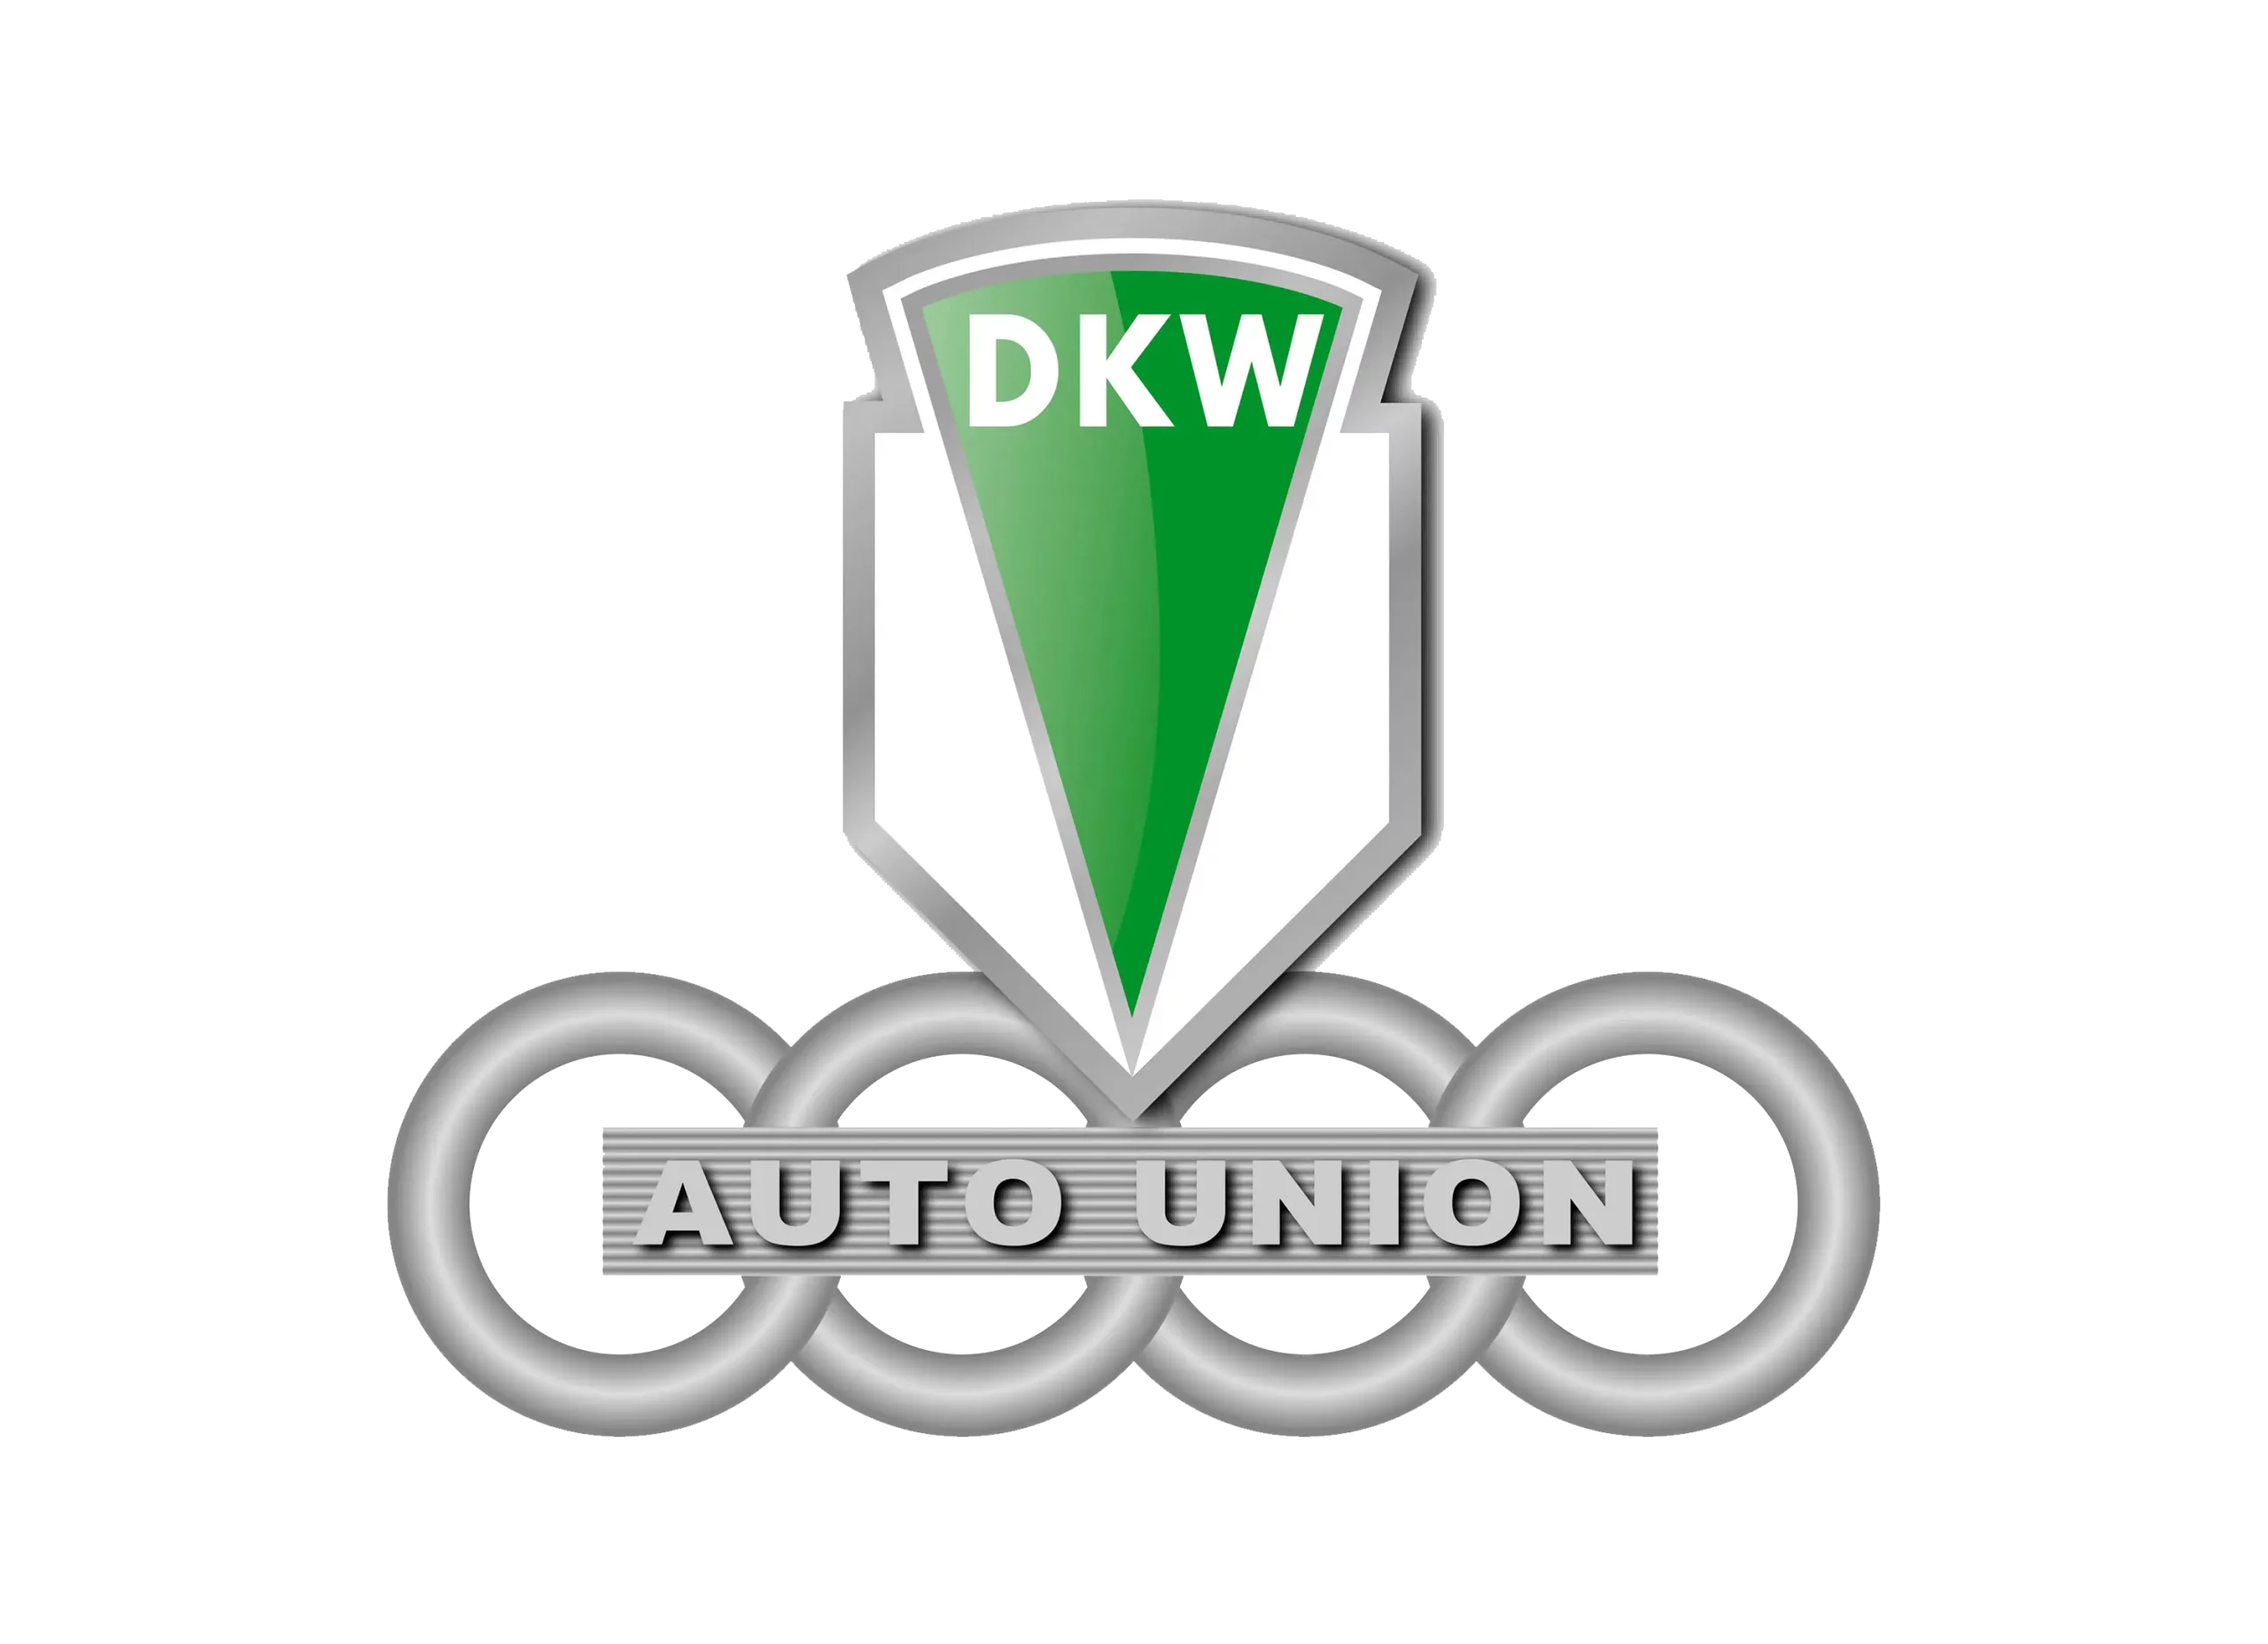 DKW logo 1949-1966